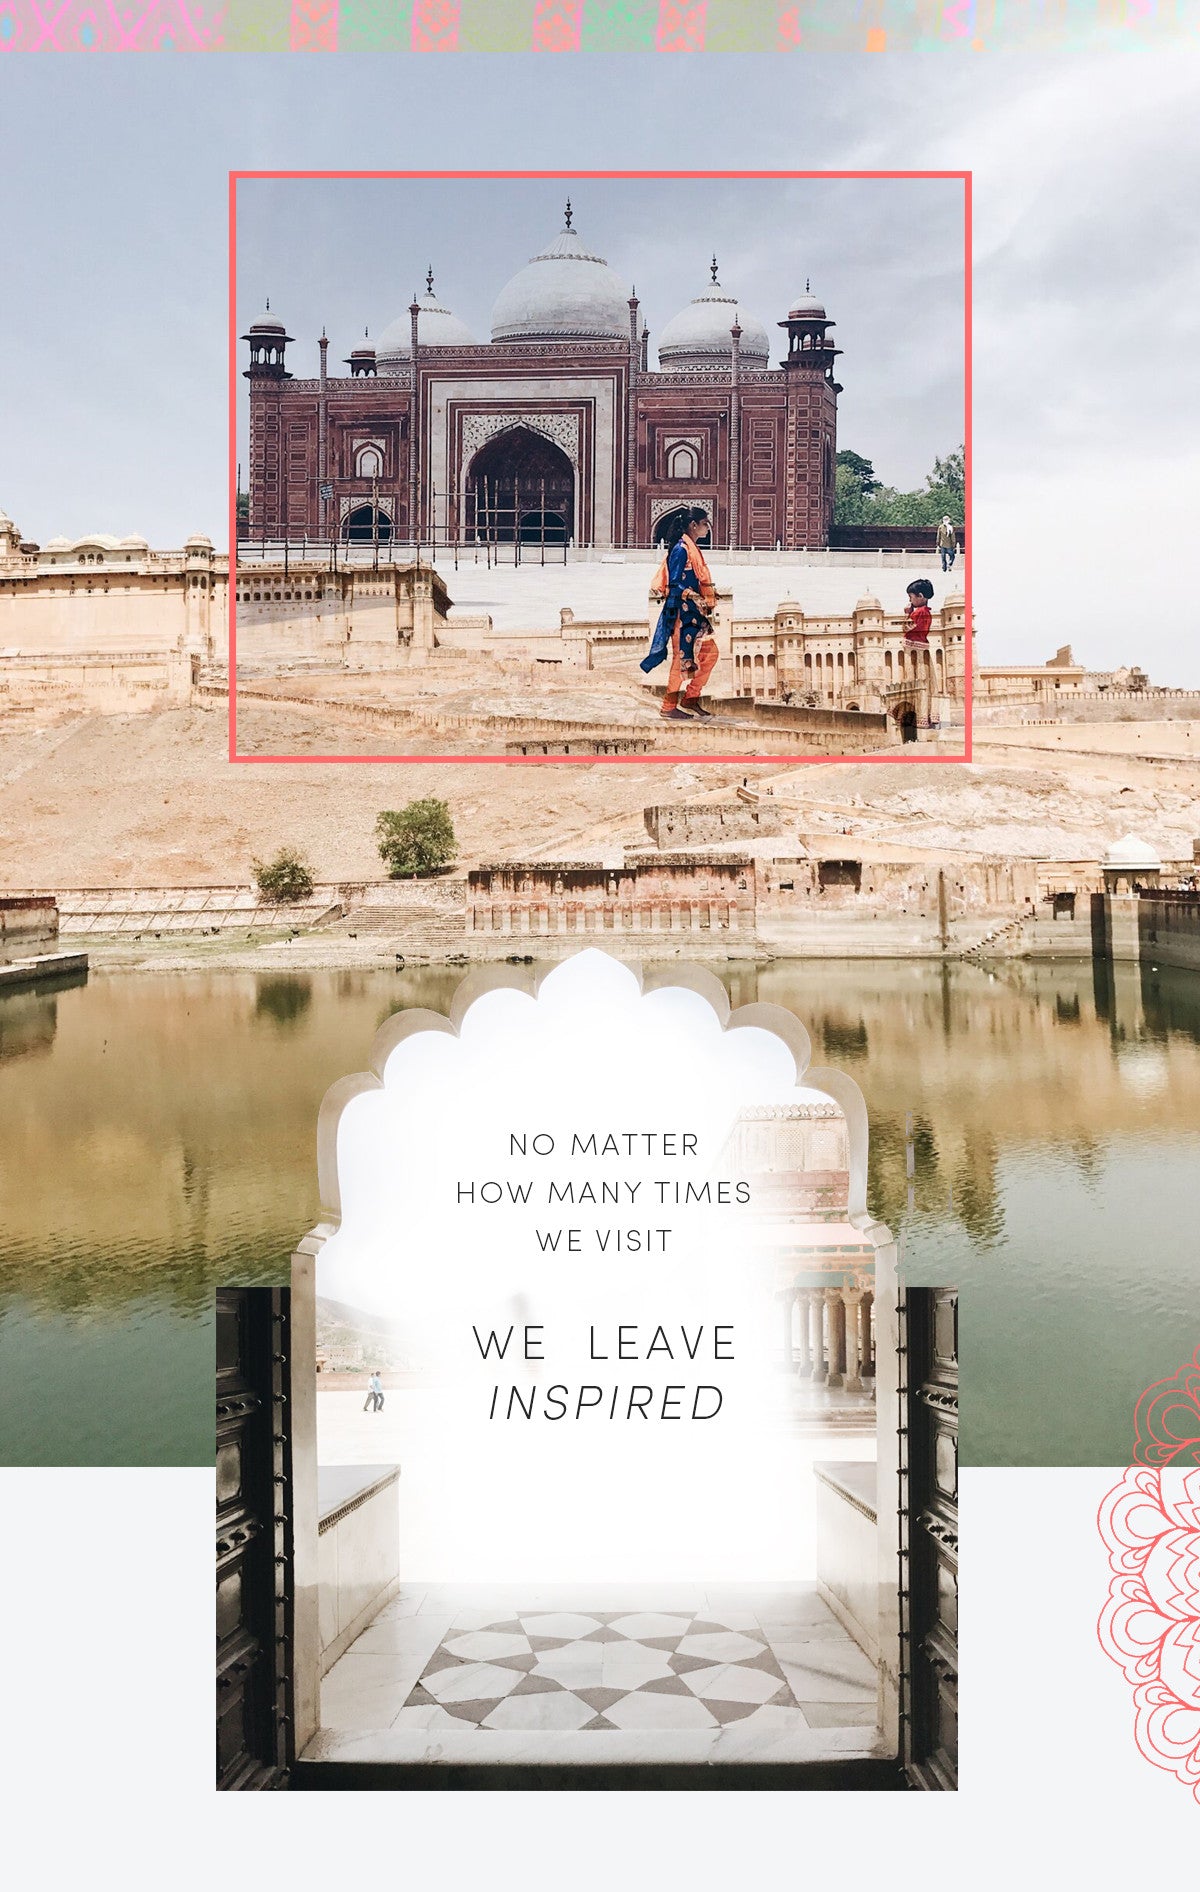 Travel Diaries Part 2 India